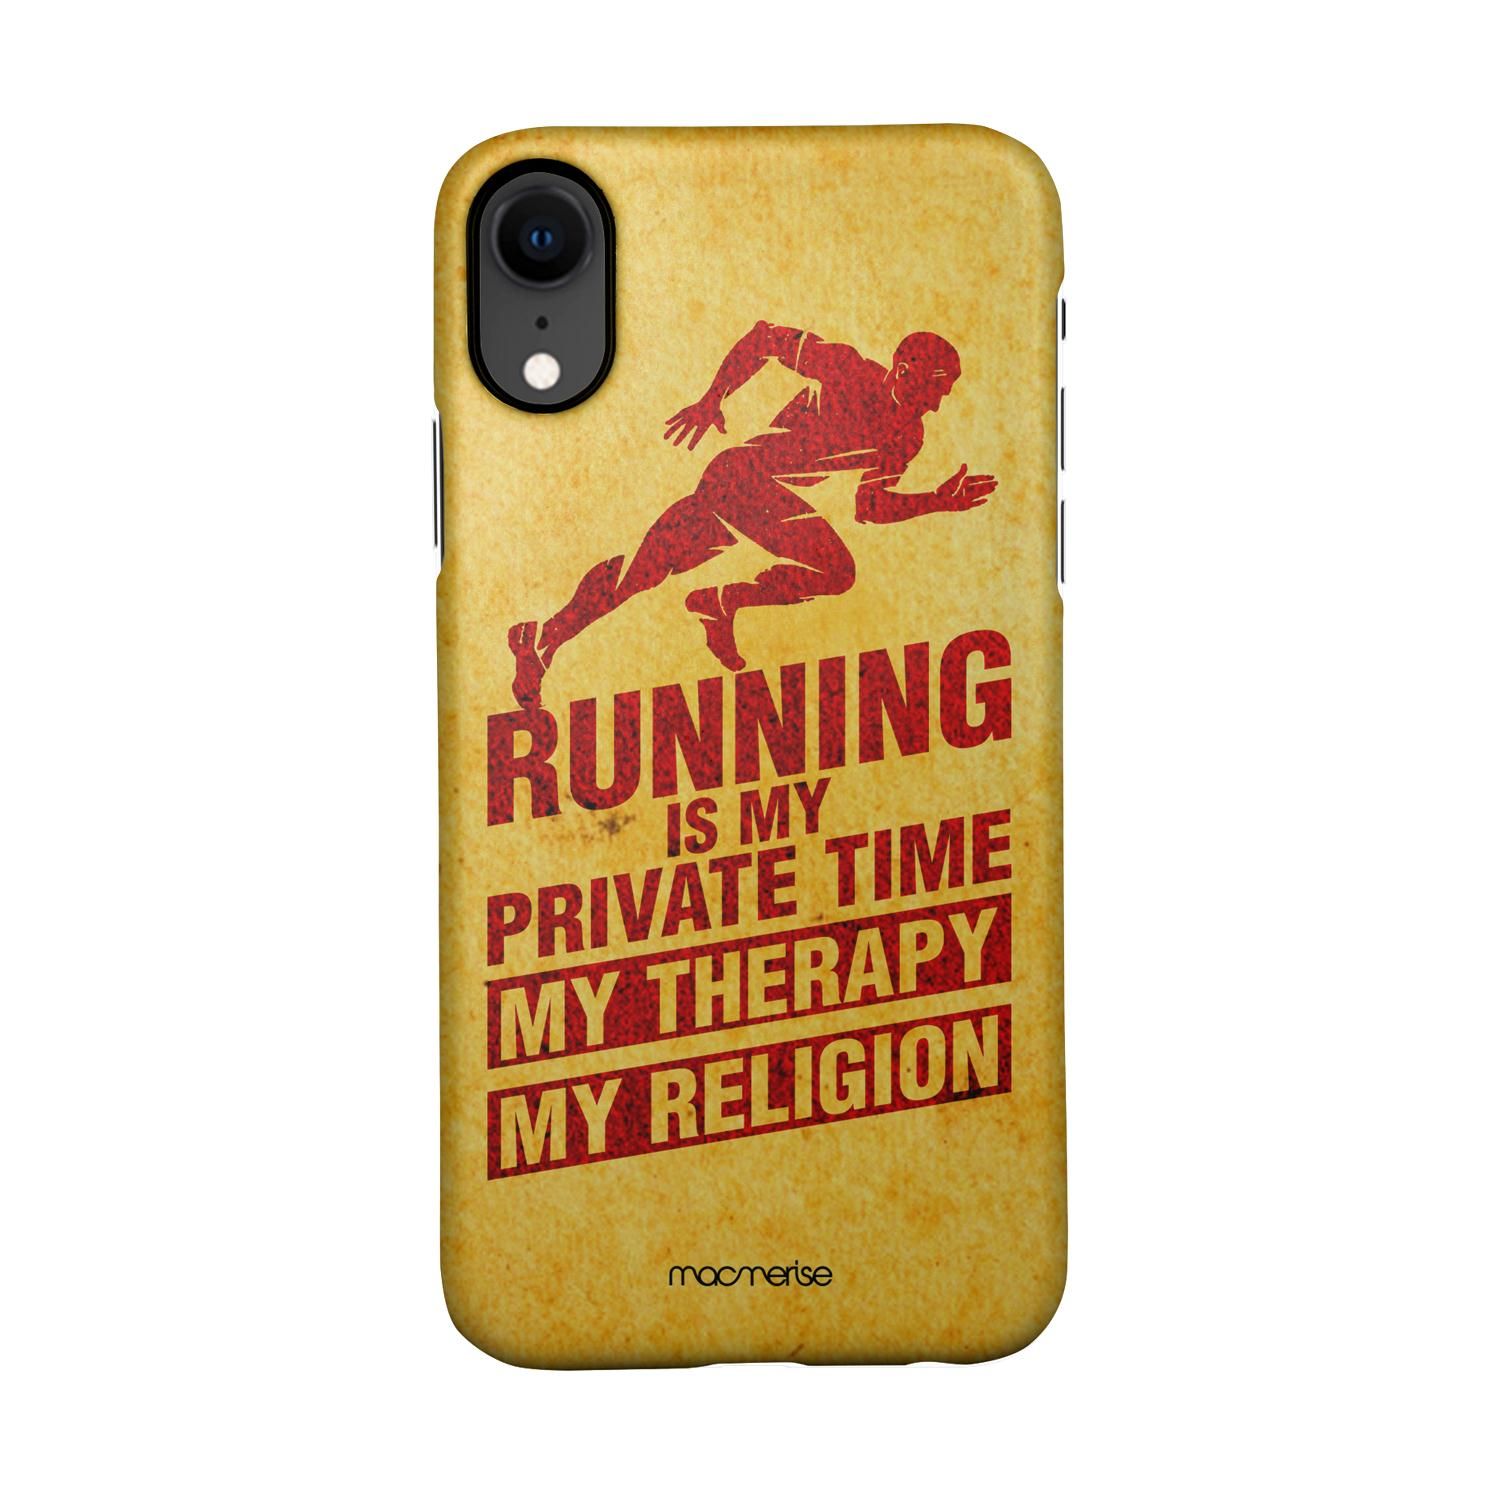 Buy Religion Of Running - Sleek Phone Case for iPhone XR Online